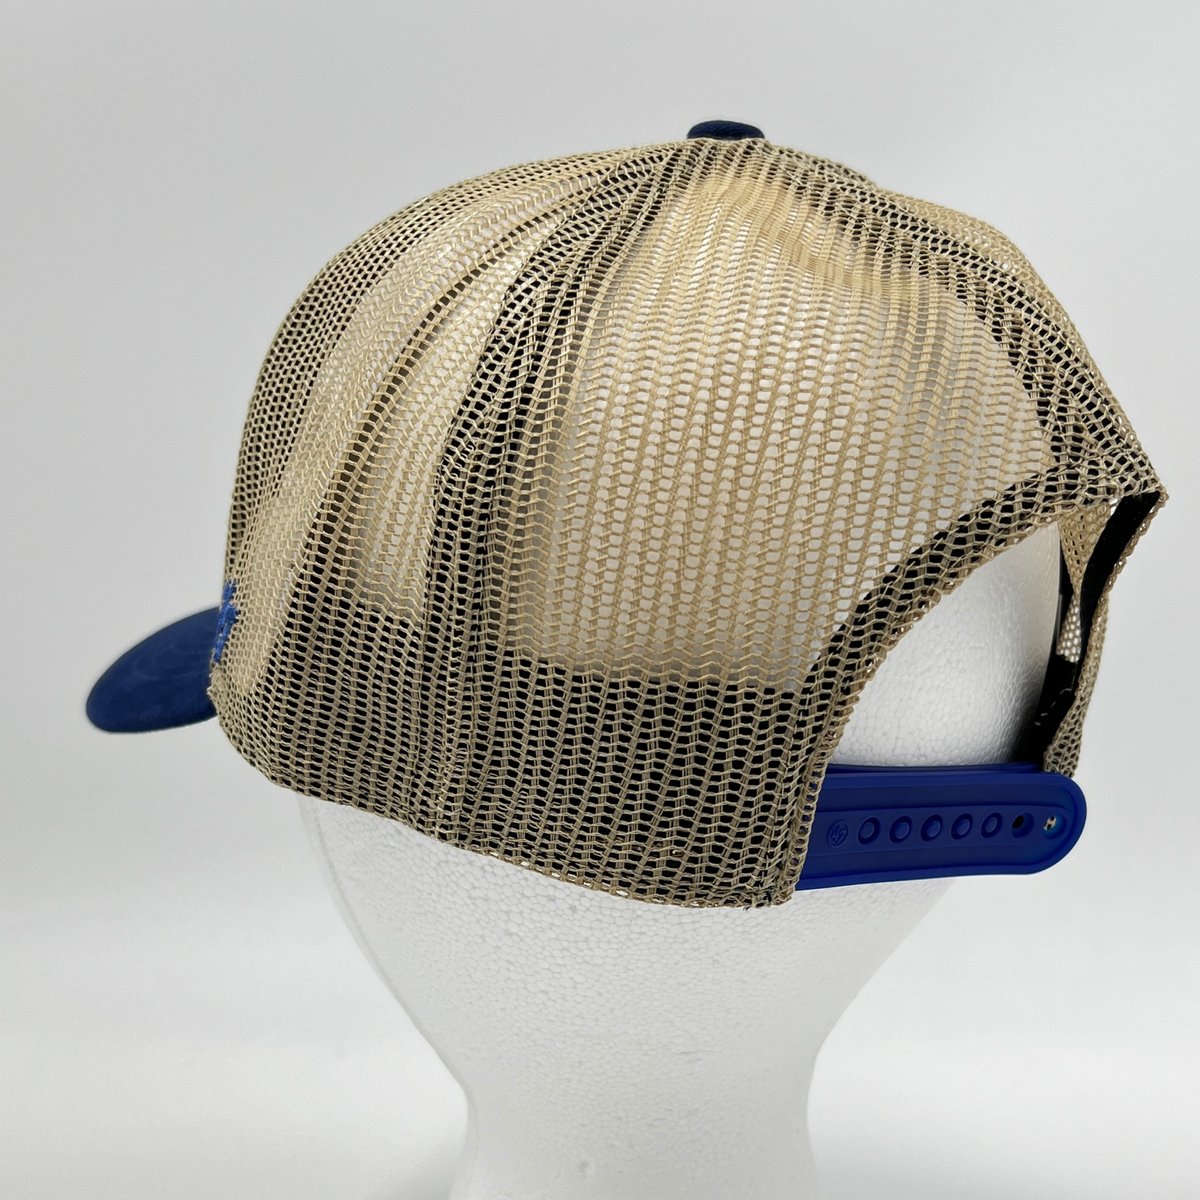 47 Brand Men's '47 Brand Blue St. Louis Blues Clean Up Adjustable Hat